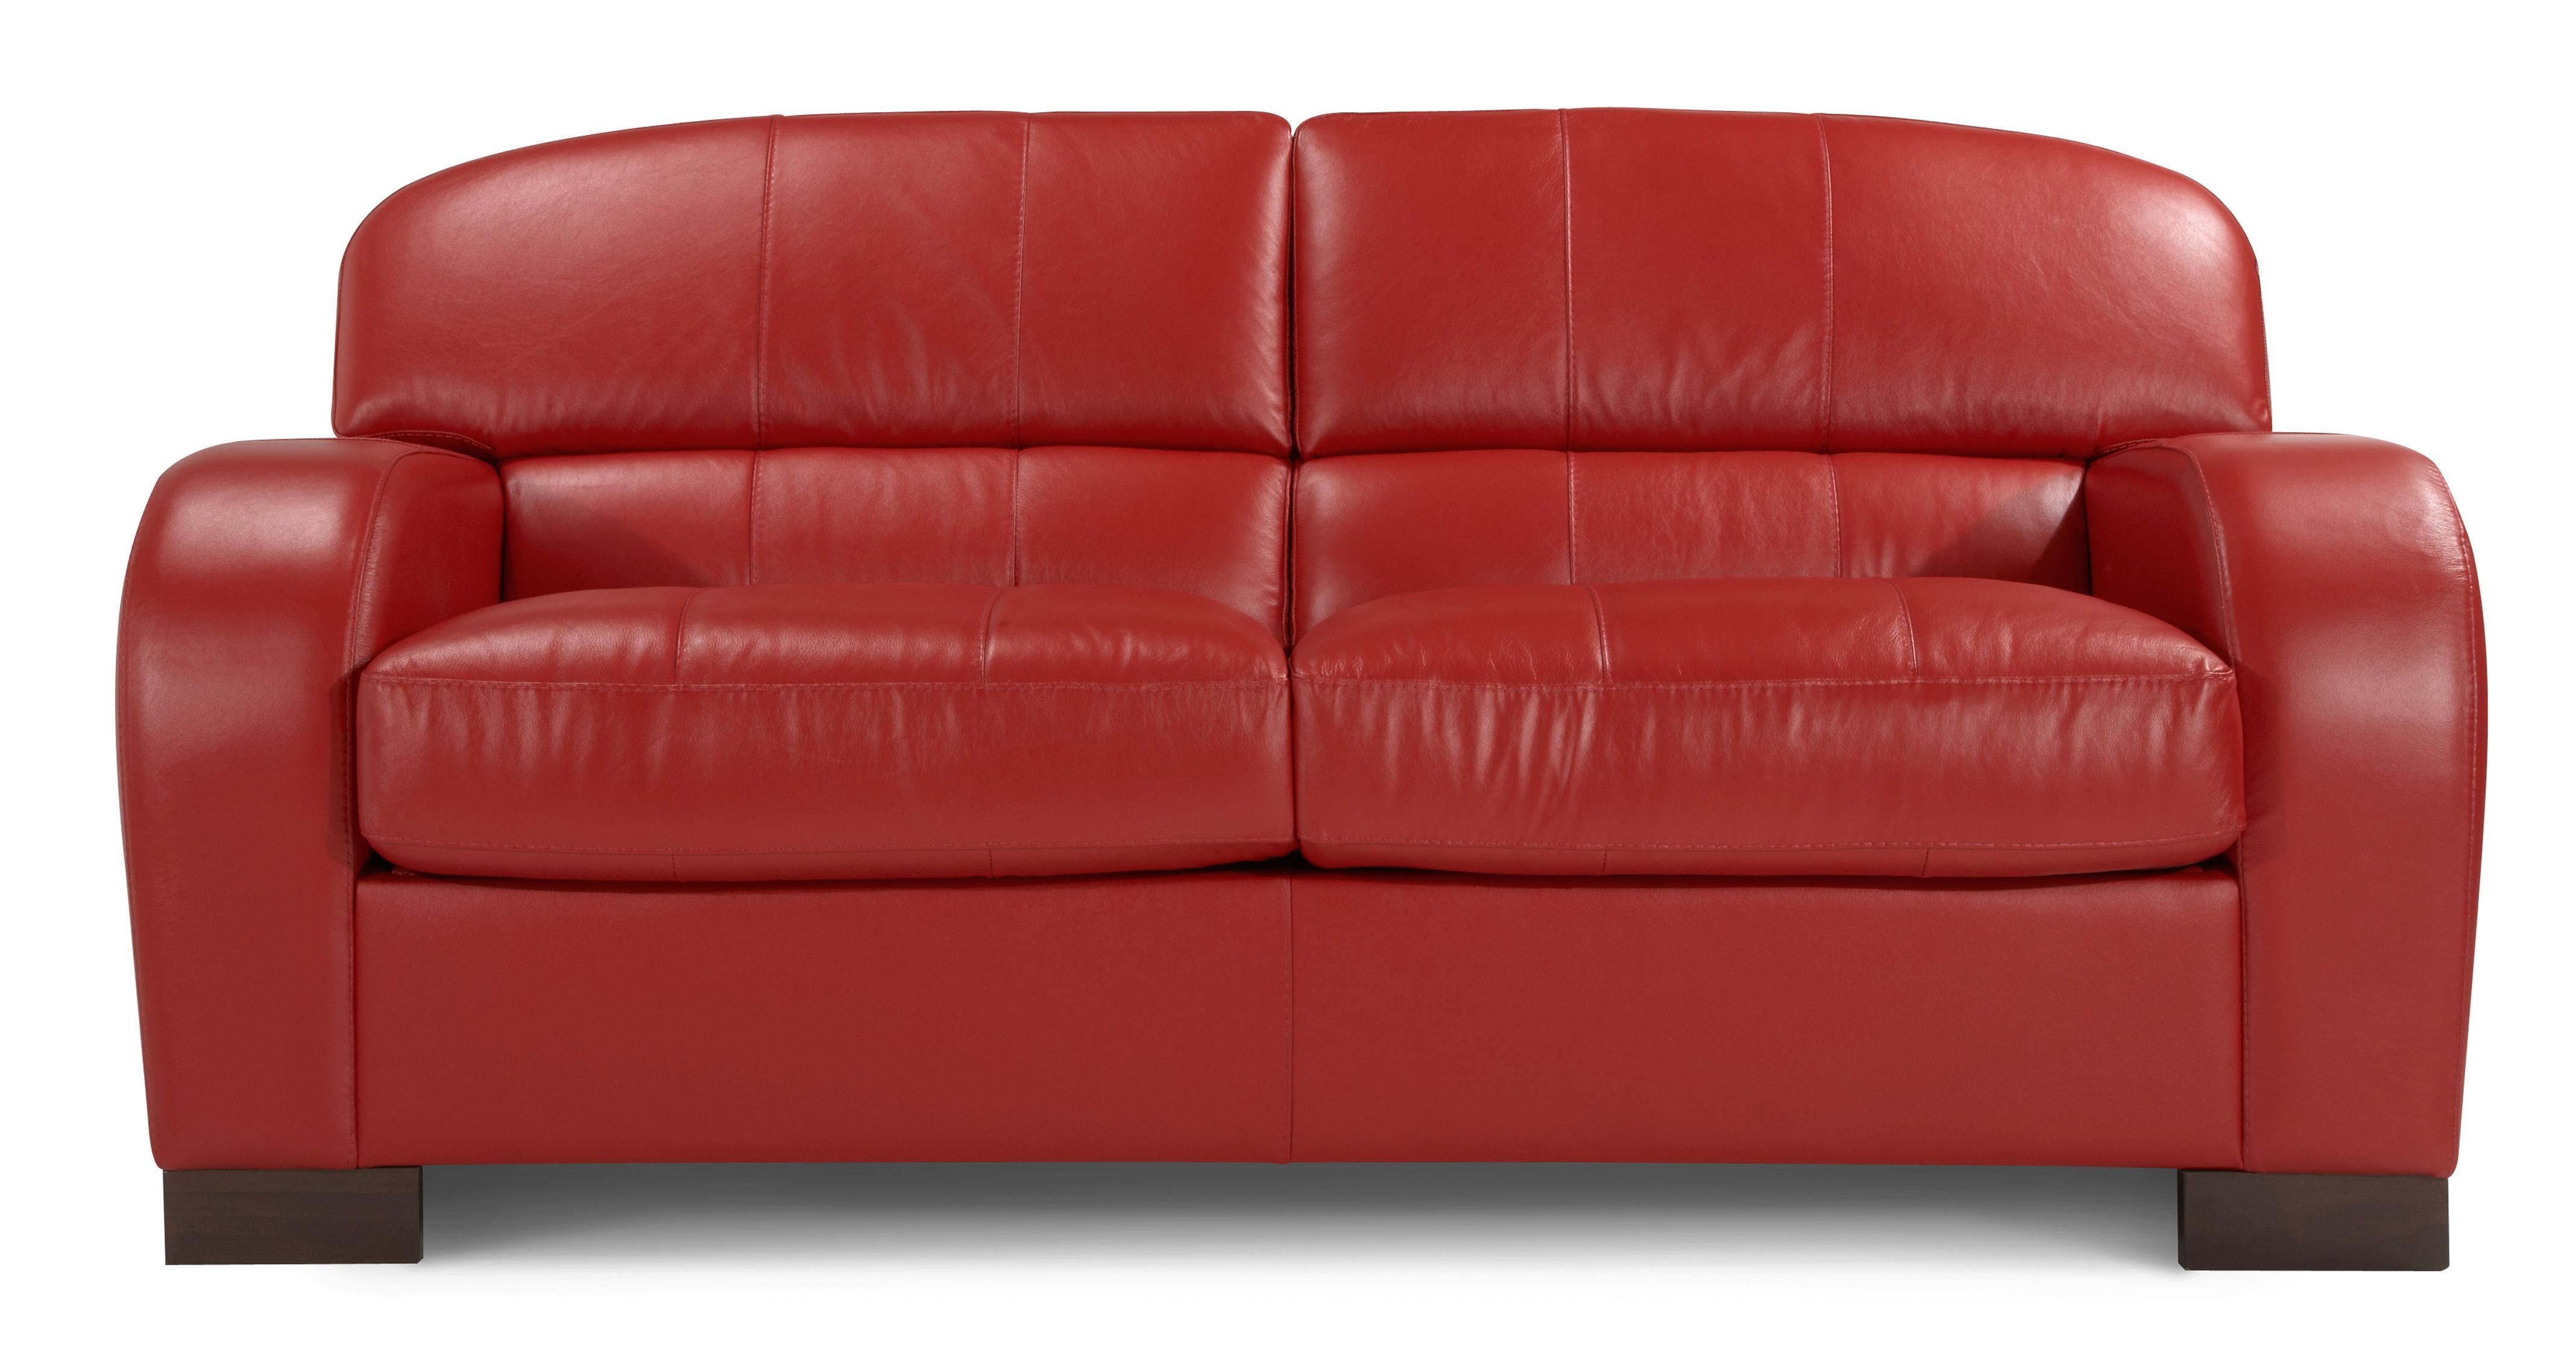 ebay dfs sofa bed